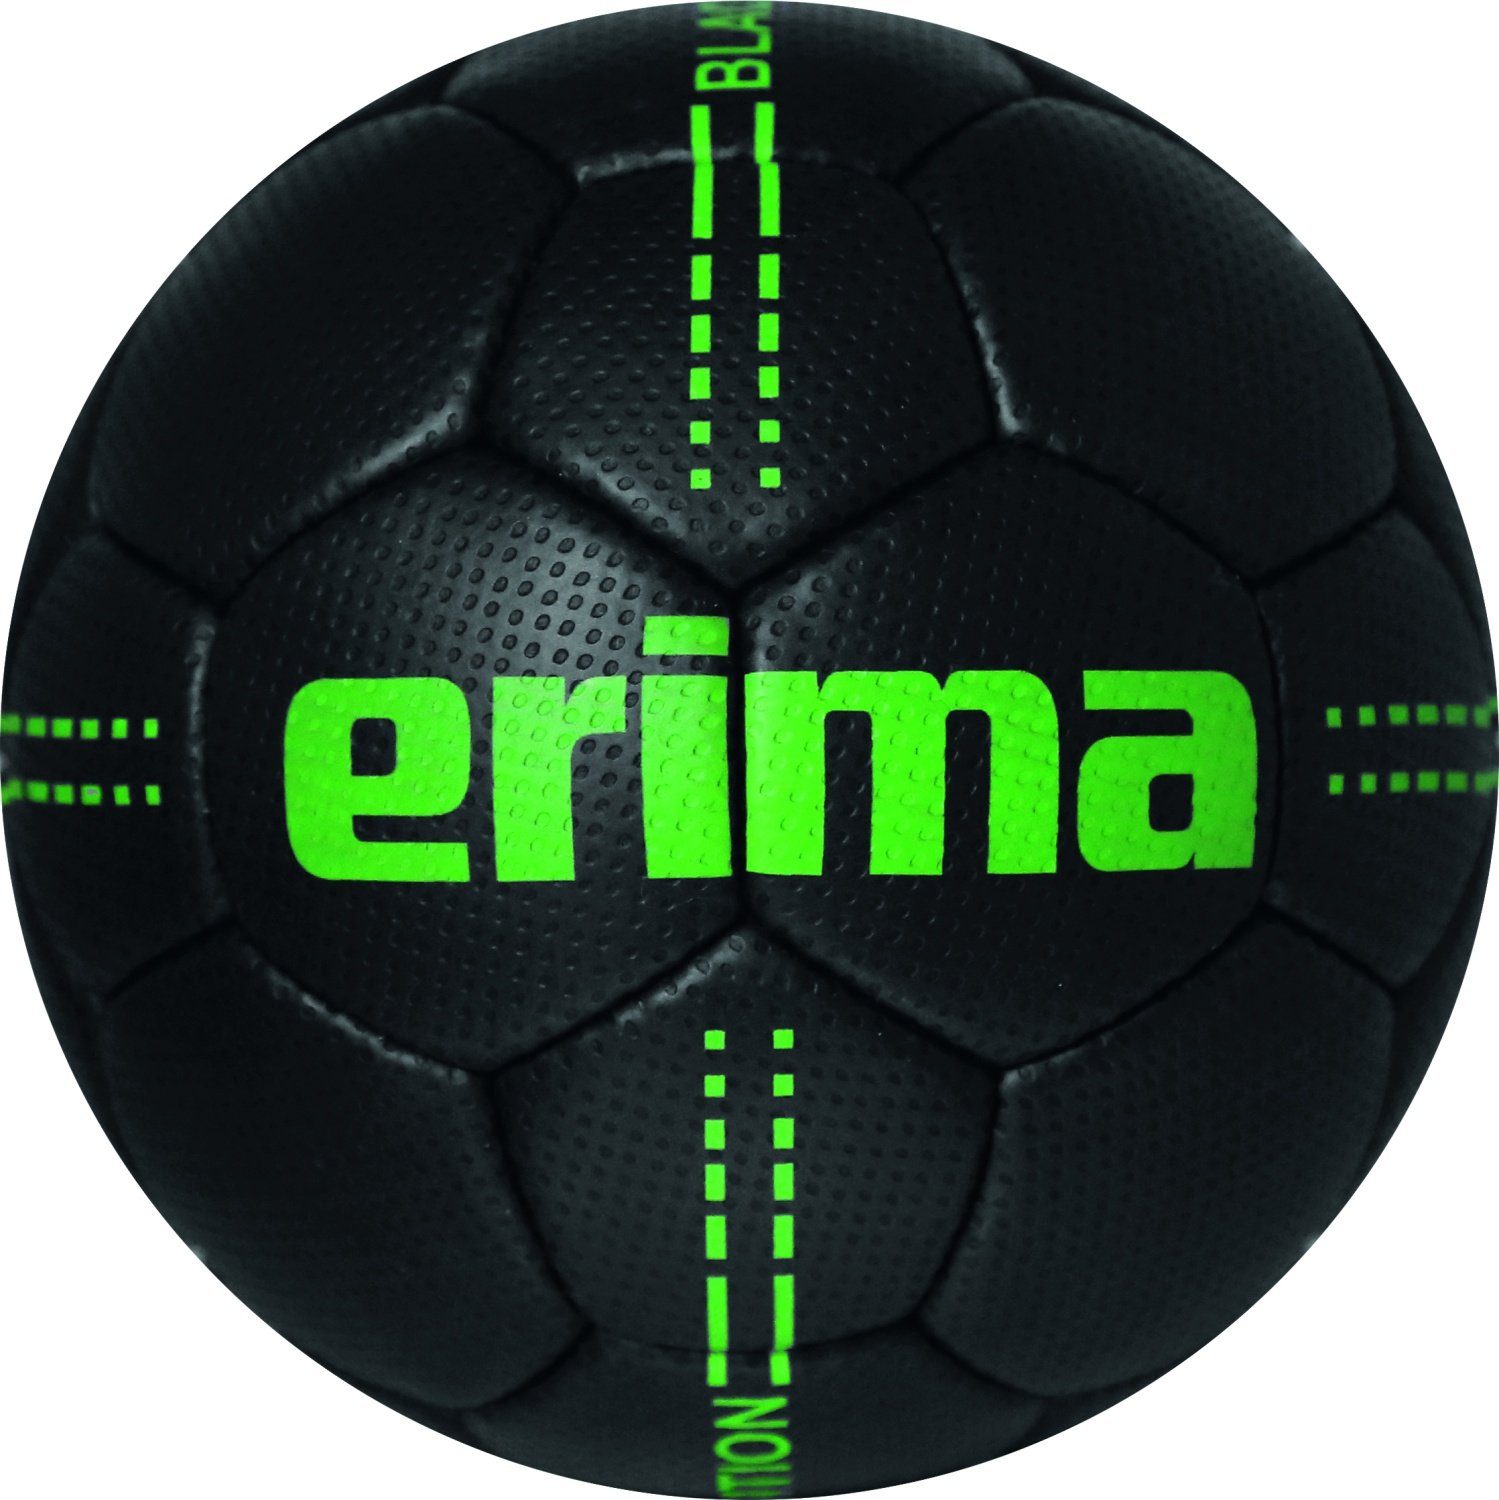 Erima Handball